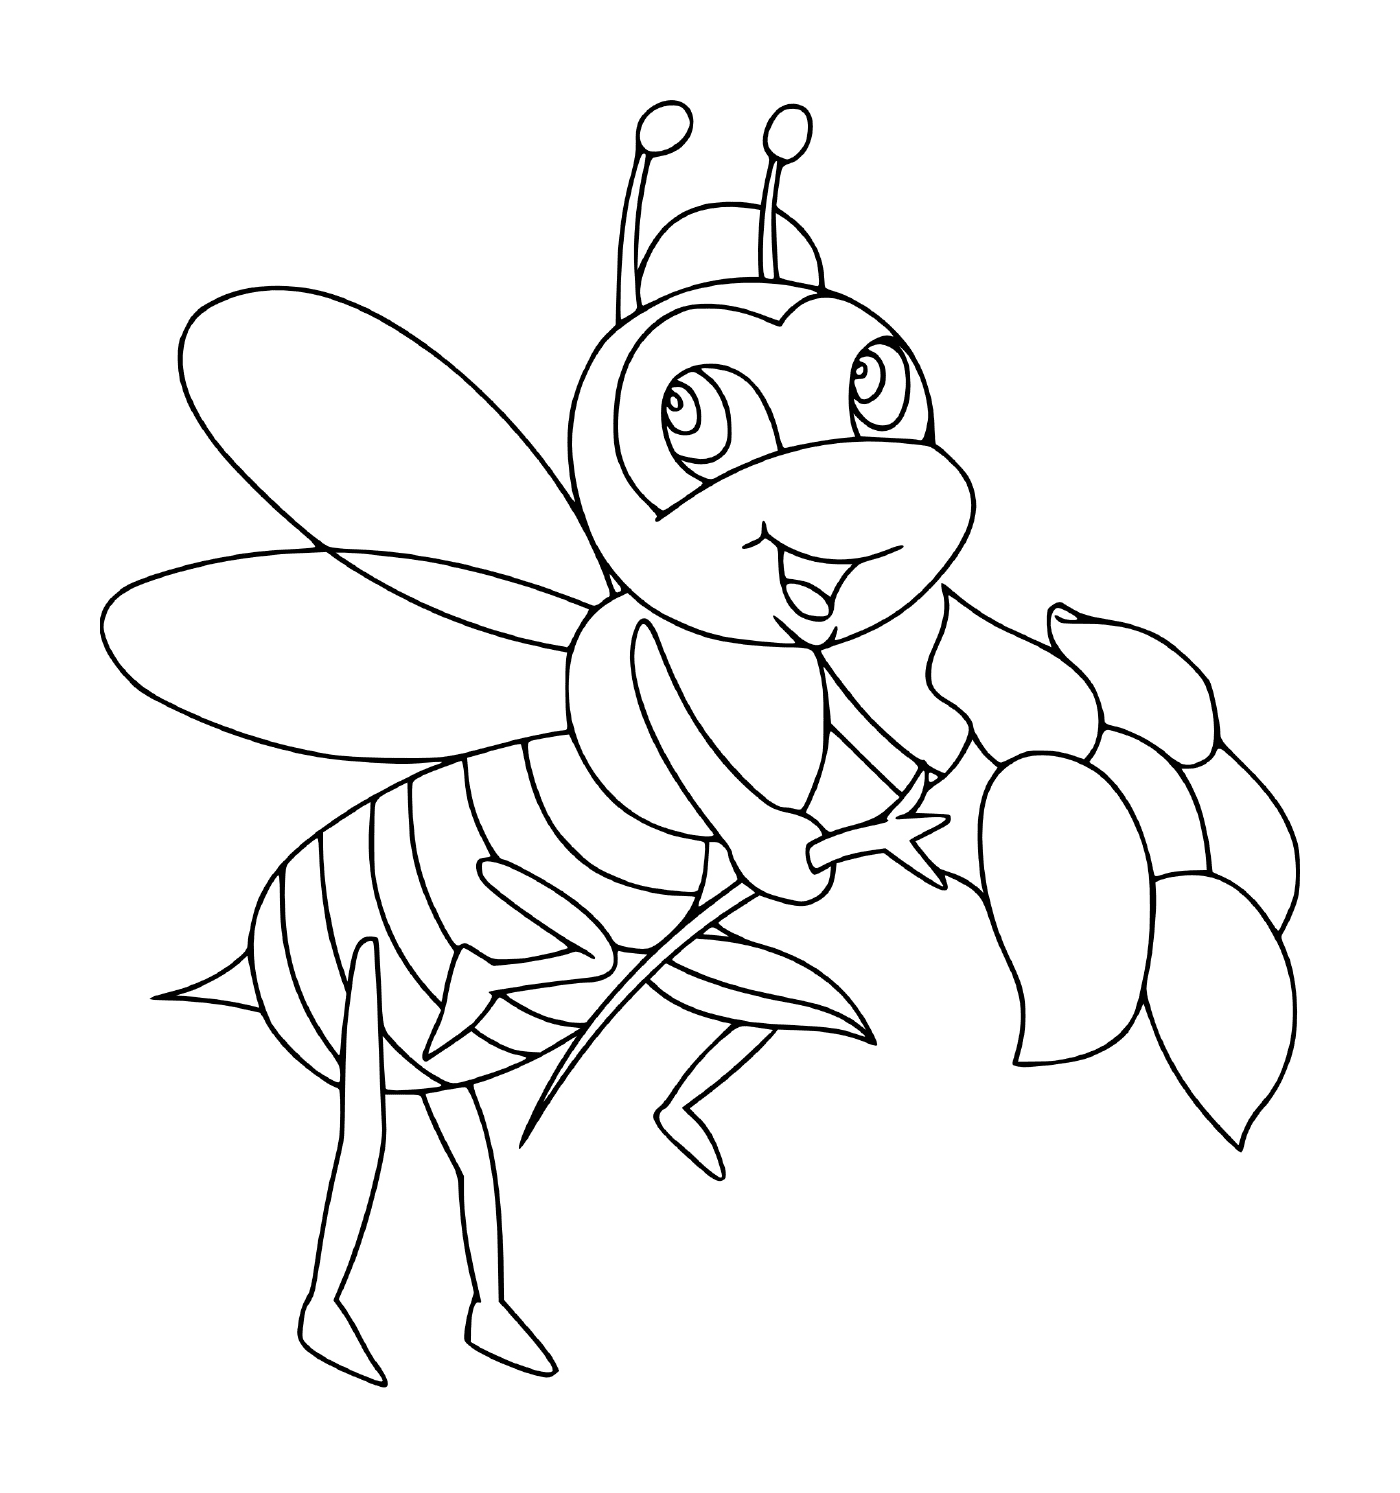  rainha abelha social 